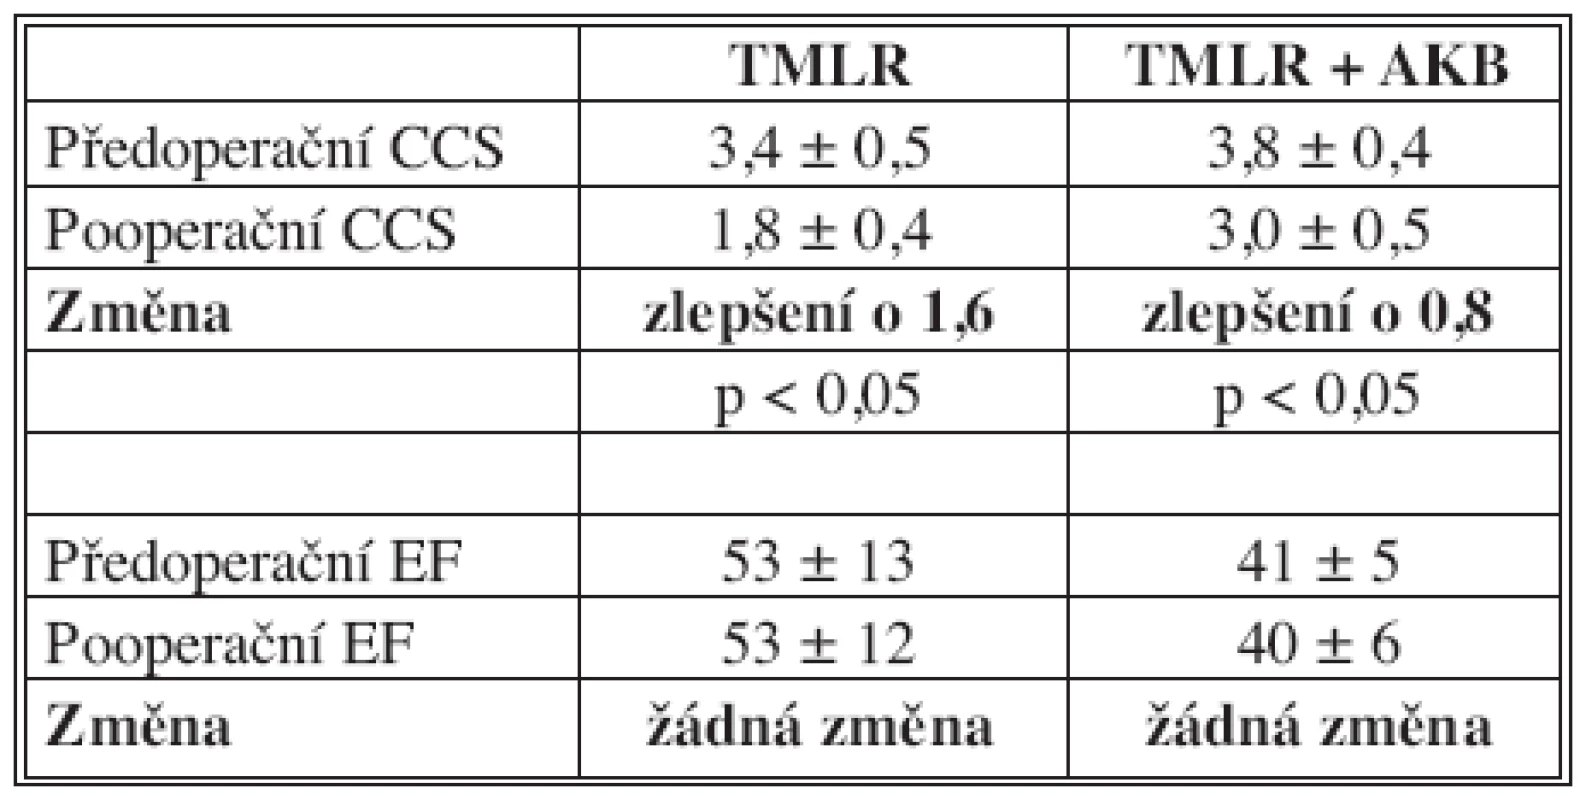 Změny v CCS a EF po TMLR
Tab. 2. Changes in CCS and EF following TMLR